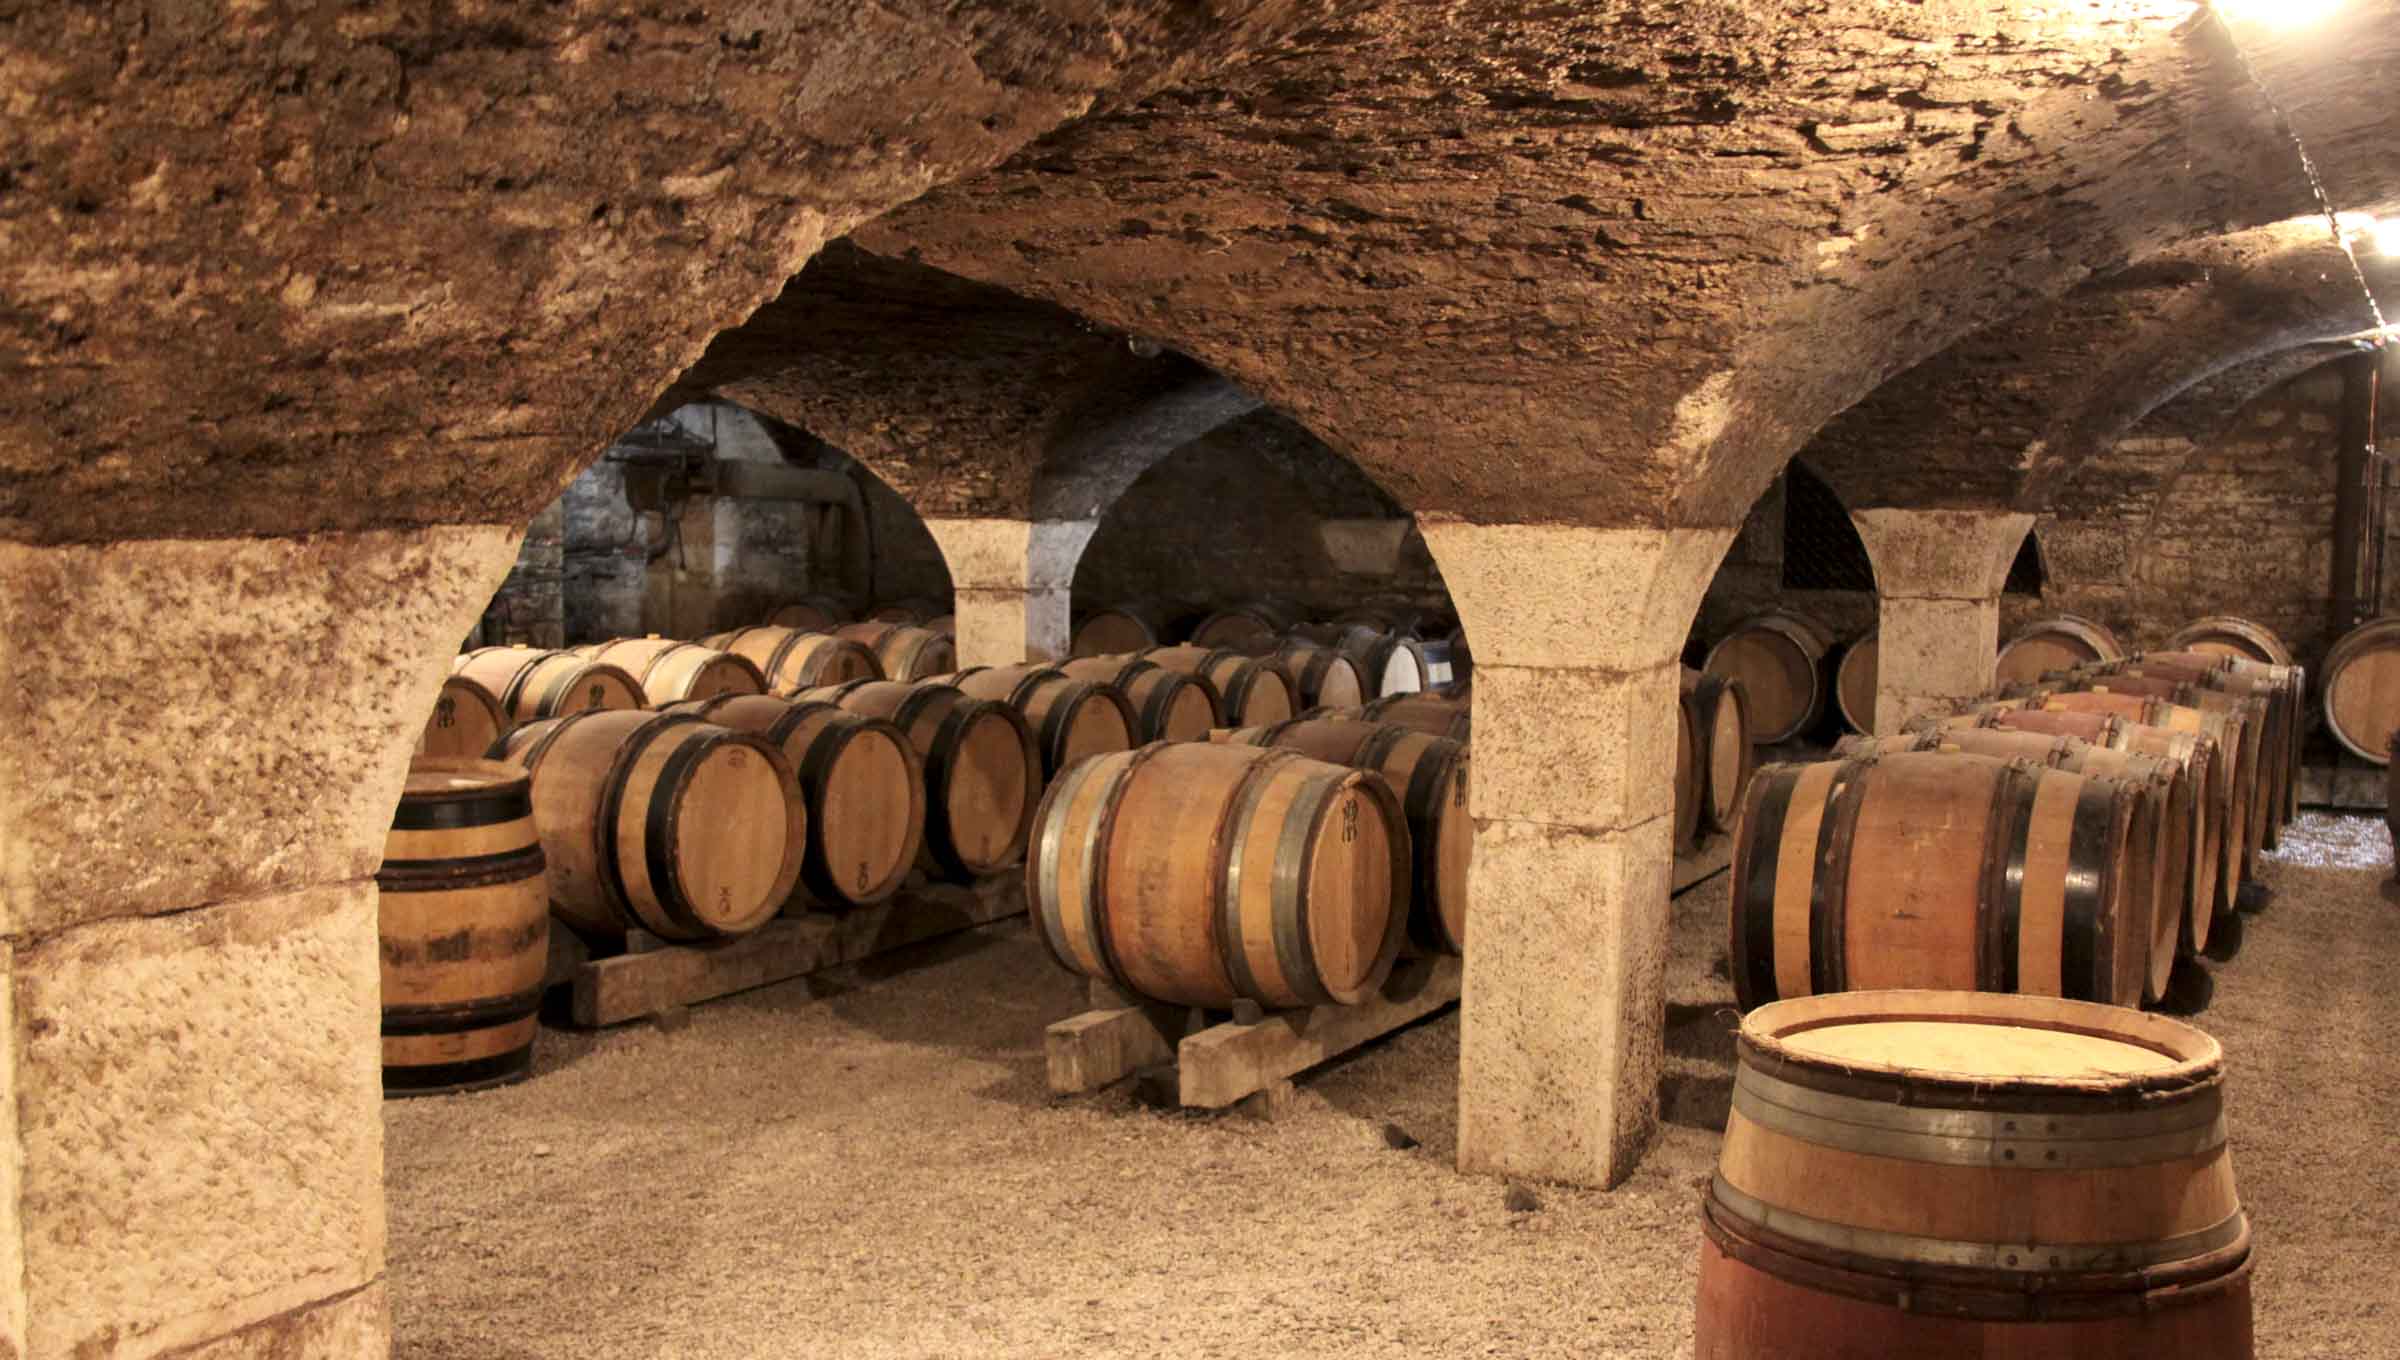 burgundy wine tours from dijon